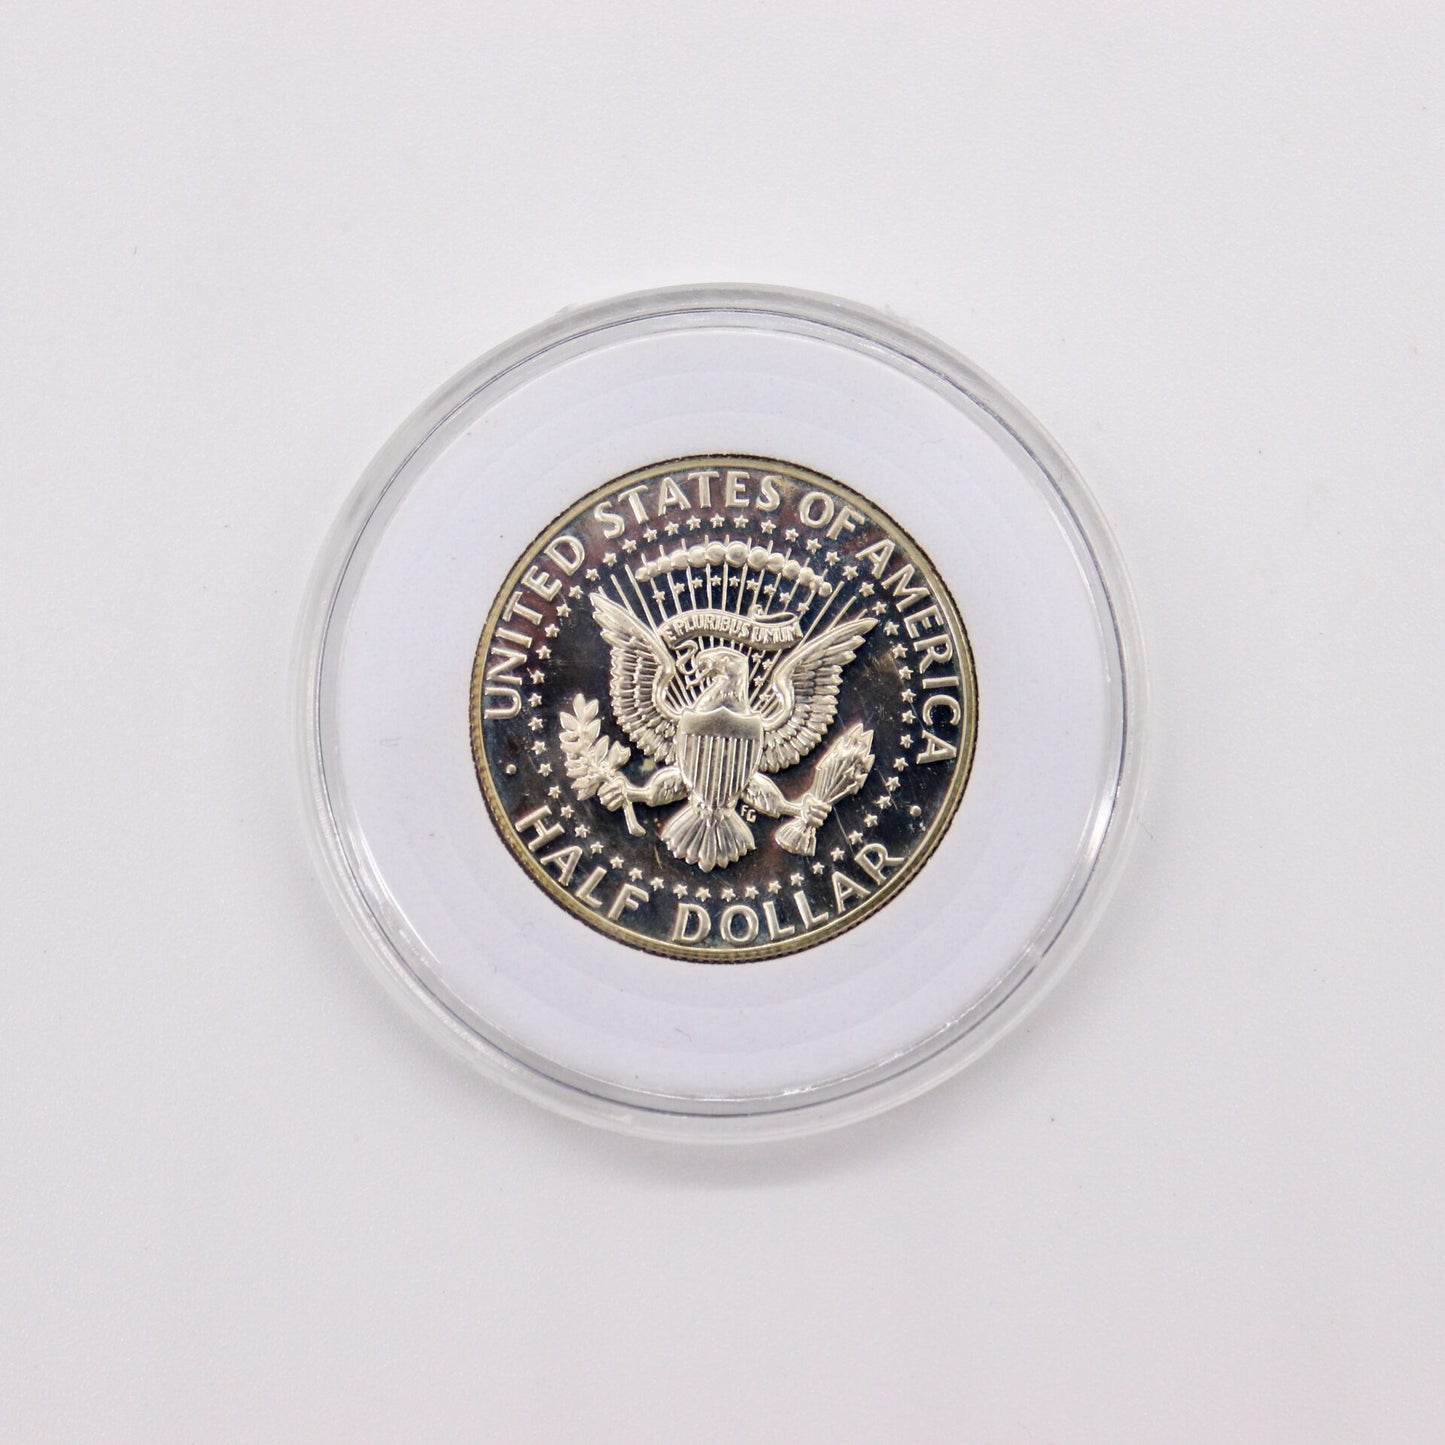 1969-S United States Mint Proof Kennedy Half Dollar, 40% Silver, Gem Mint